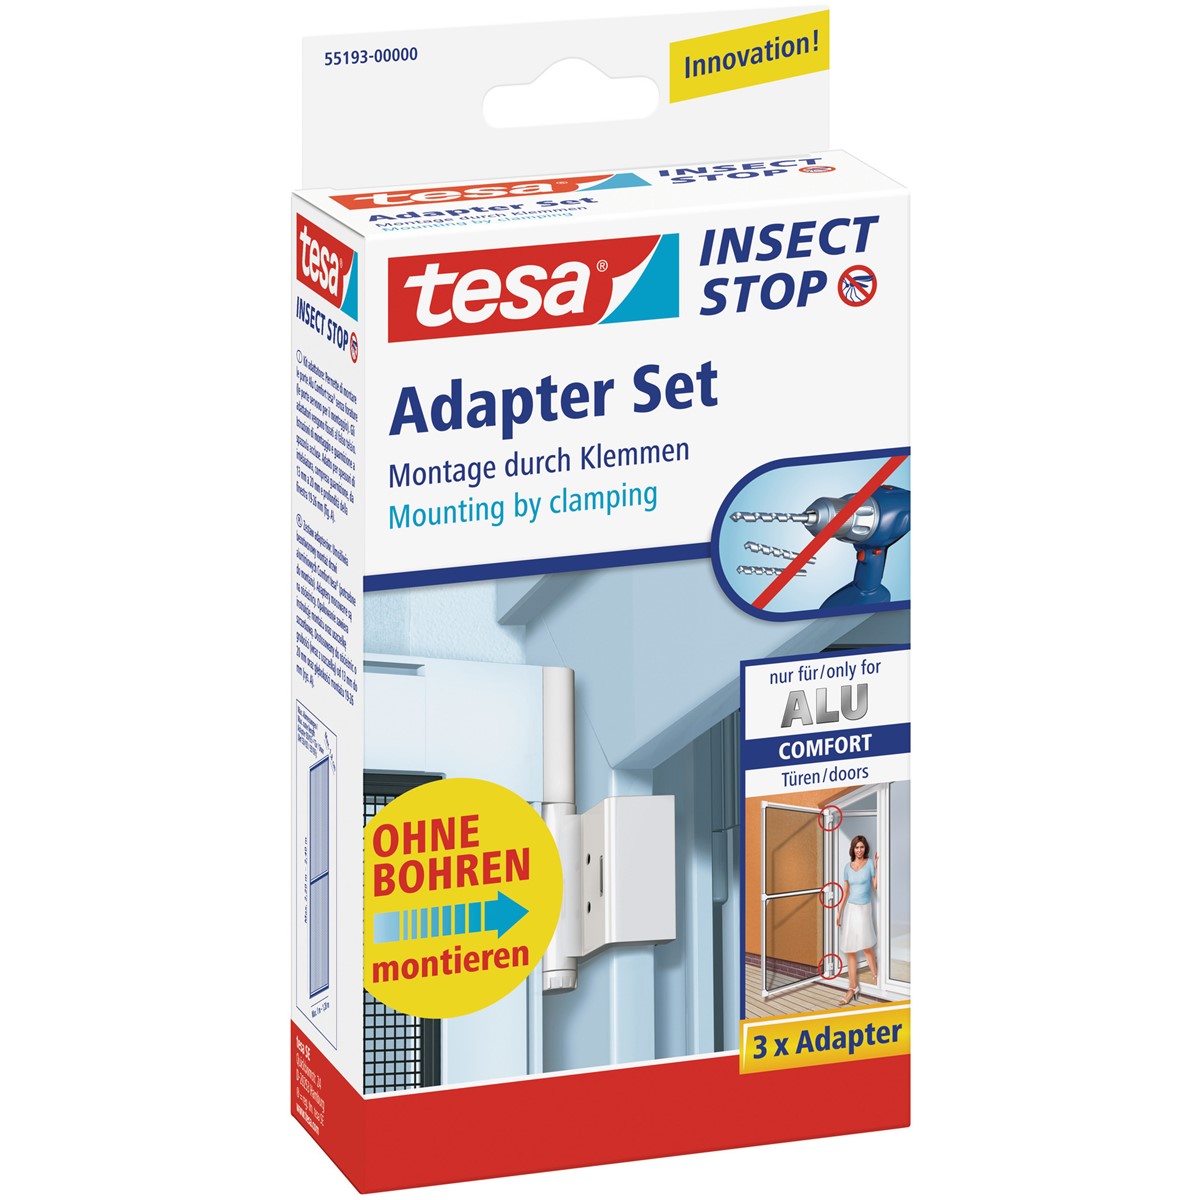 tesa 55193-00000 - Insect ALU für COMFORT Adapter weiß Tür, Stop